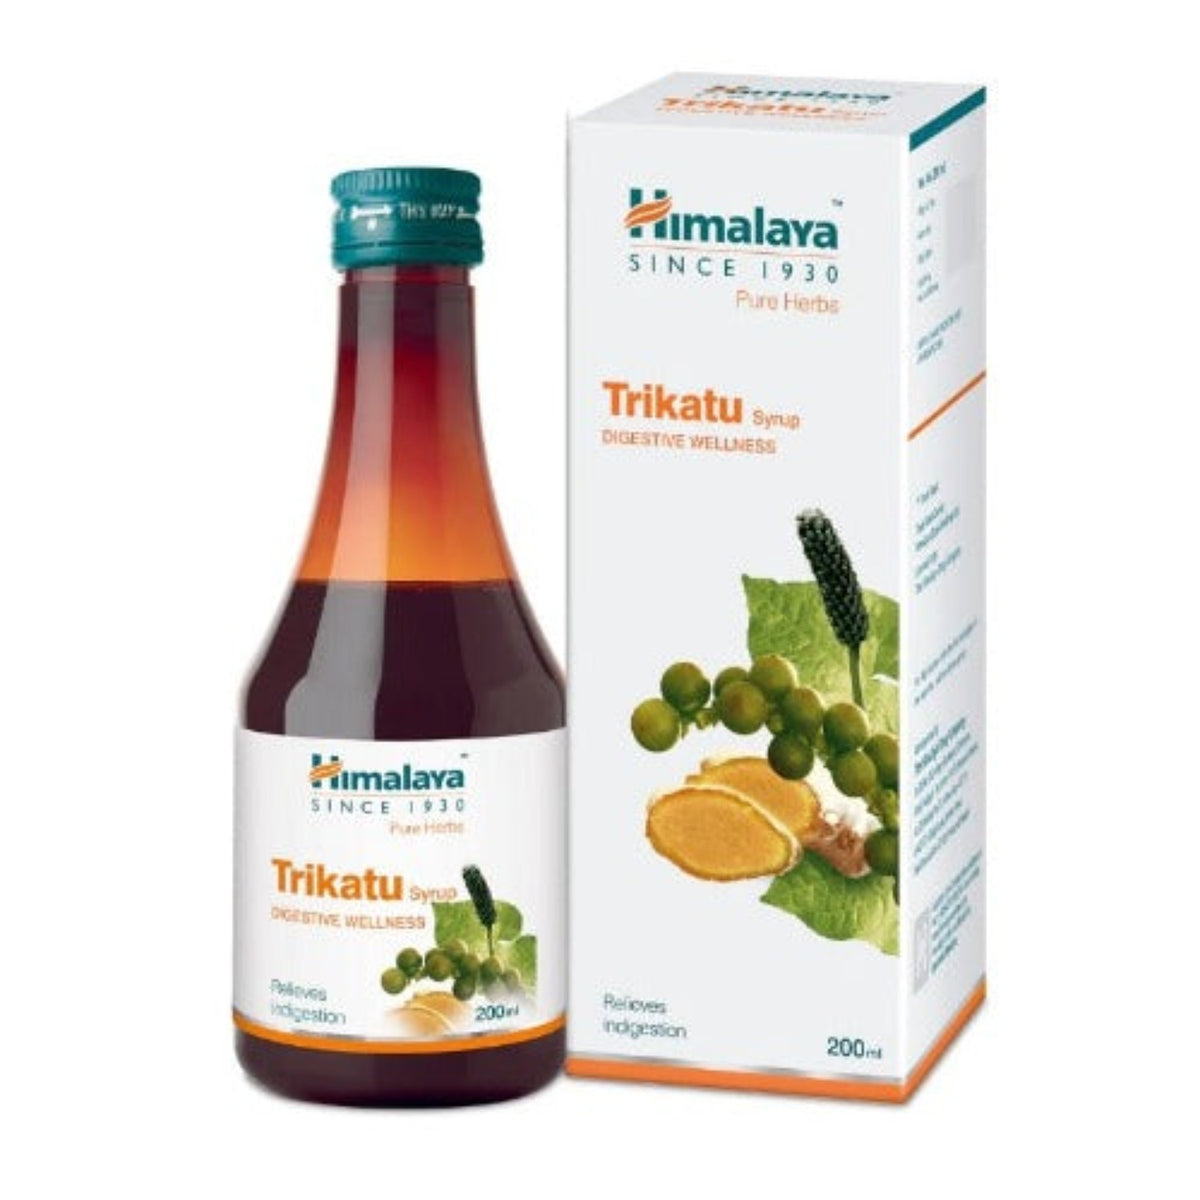 Himalaya Pure Herbs Digestive Wellness Травяной аюрведический сироп Трикату, облегчающий расстройство желудка, 200 мл